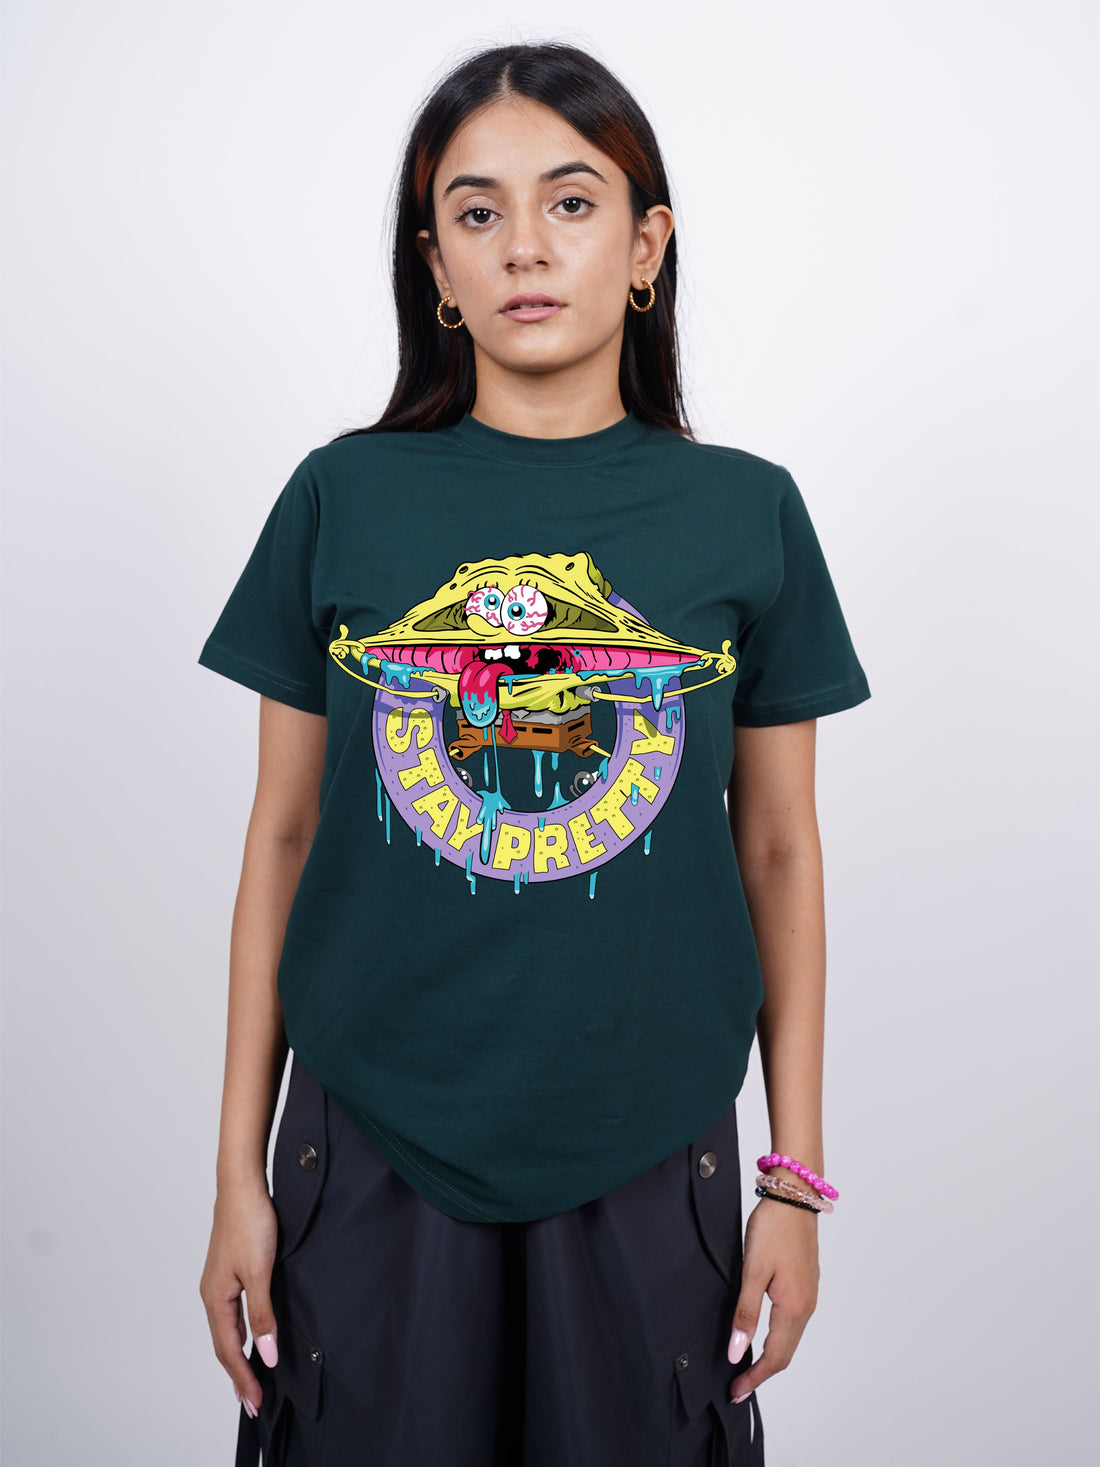 SpongeBob Stay Pretty Regular Tee (T-shirt)